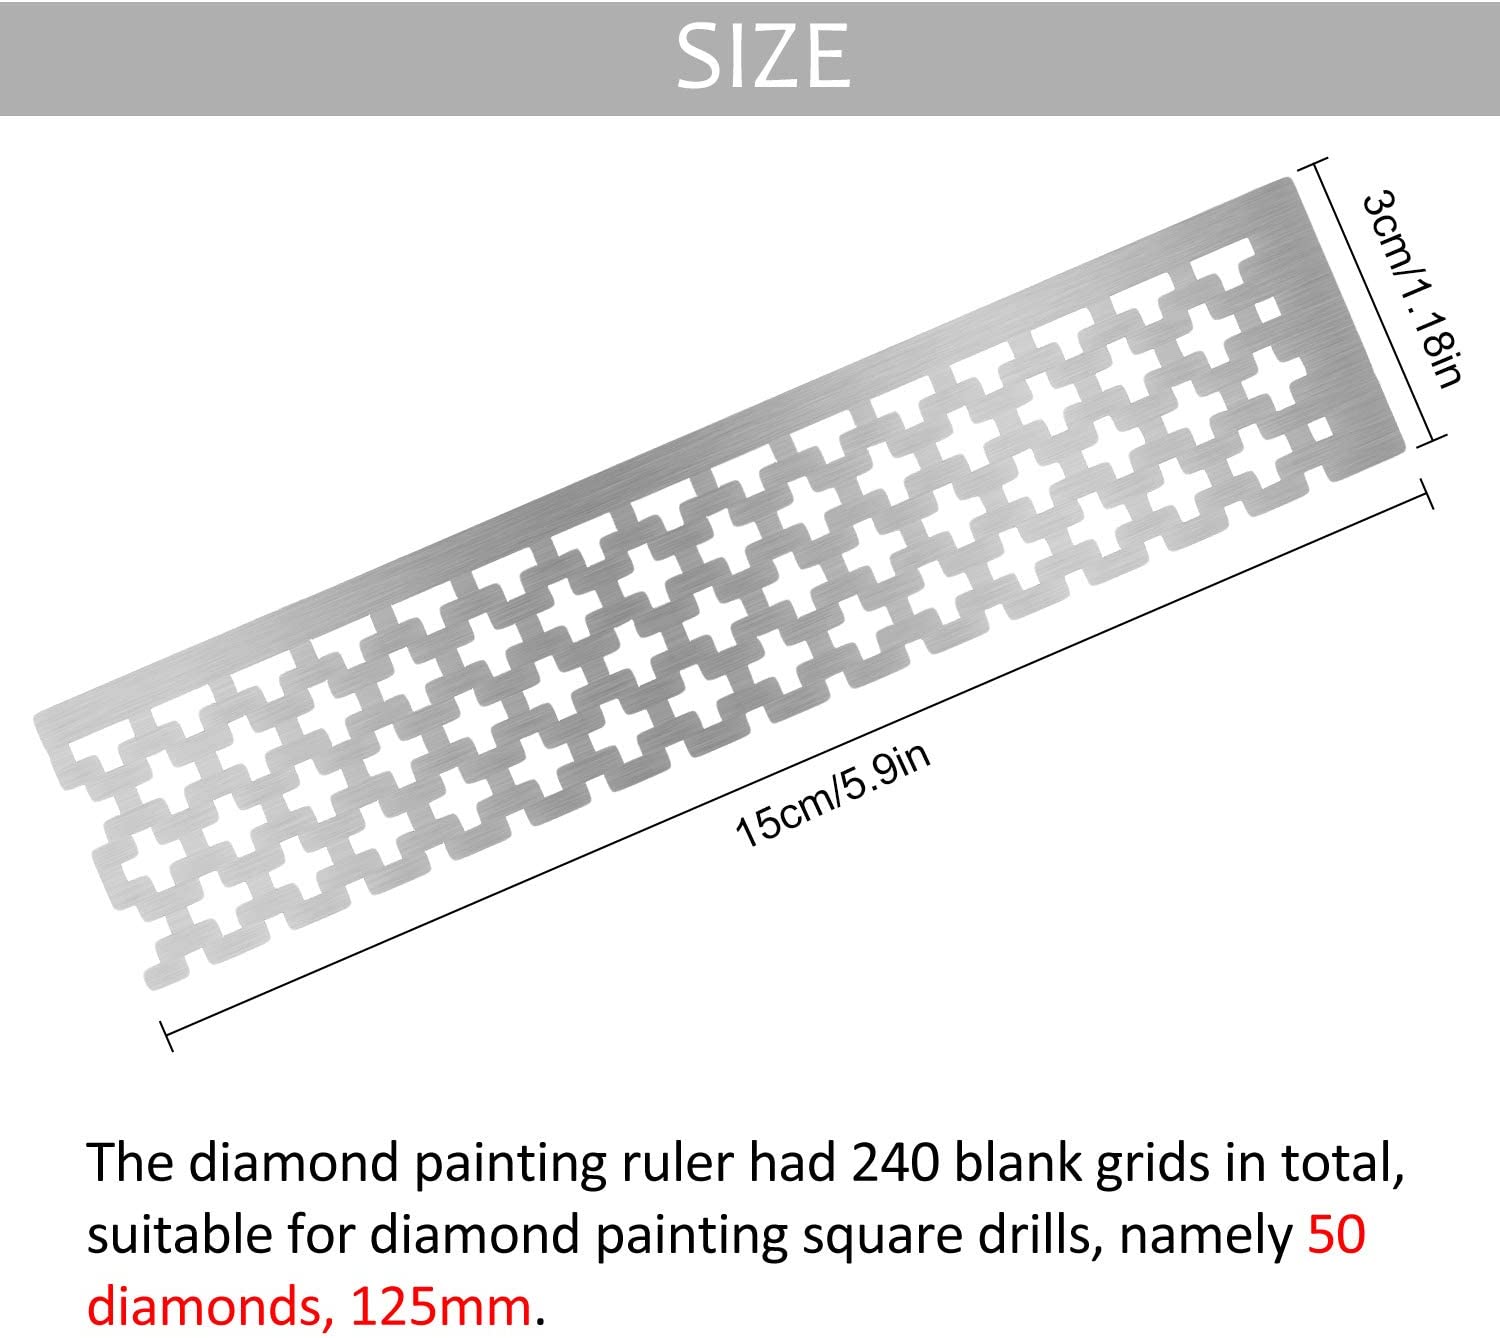 Mesh Ruler for Diamond Painting - Super Helpful